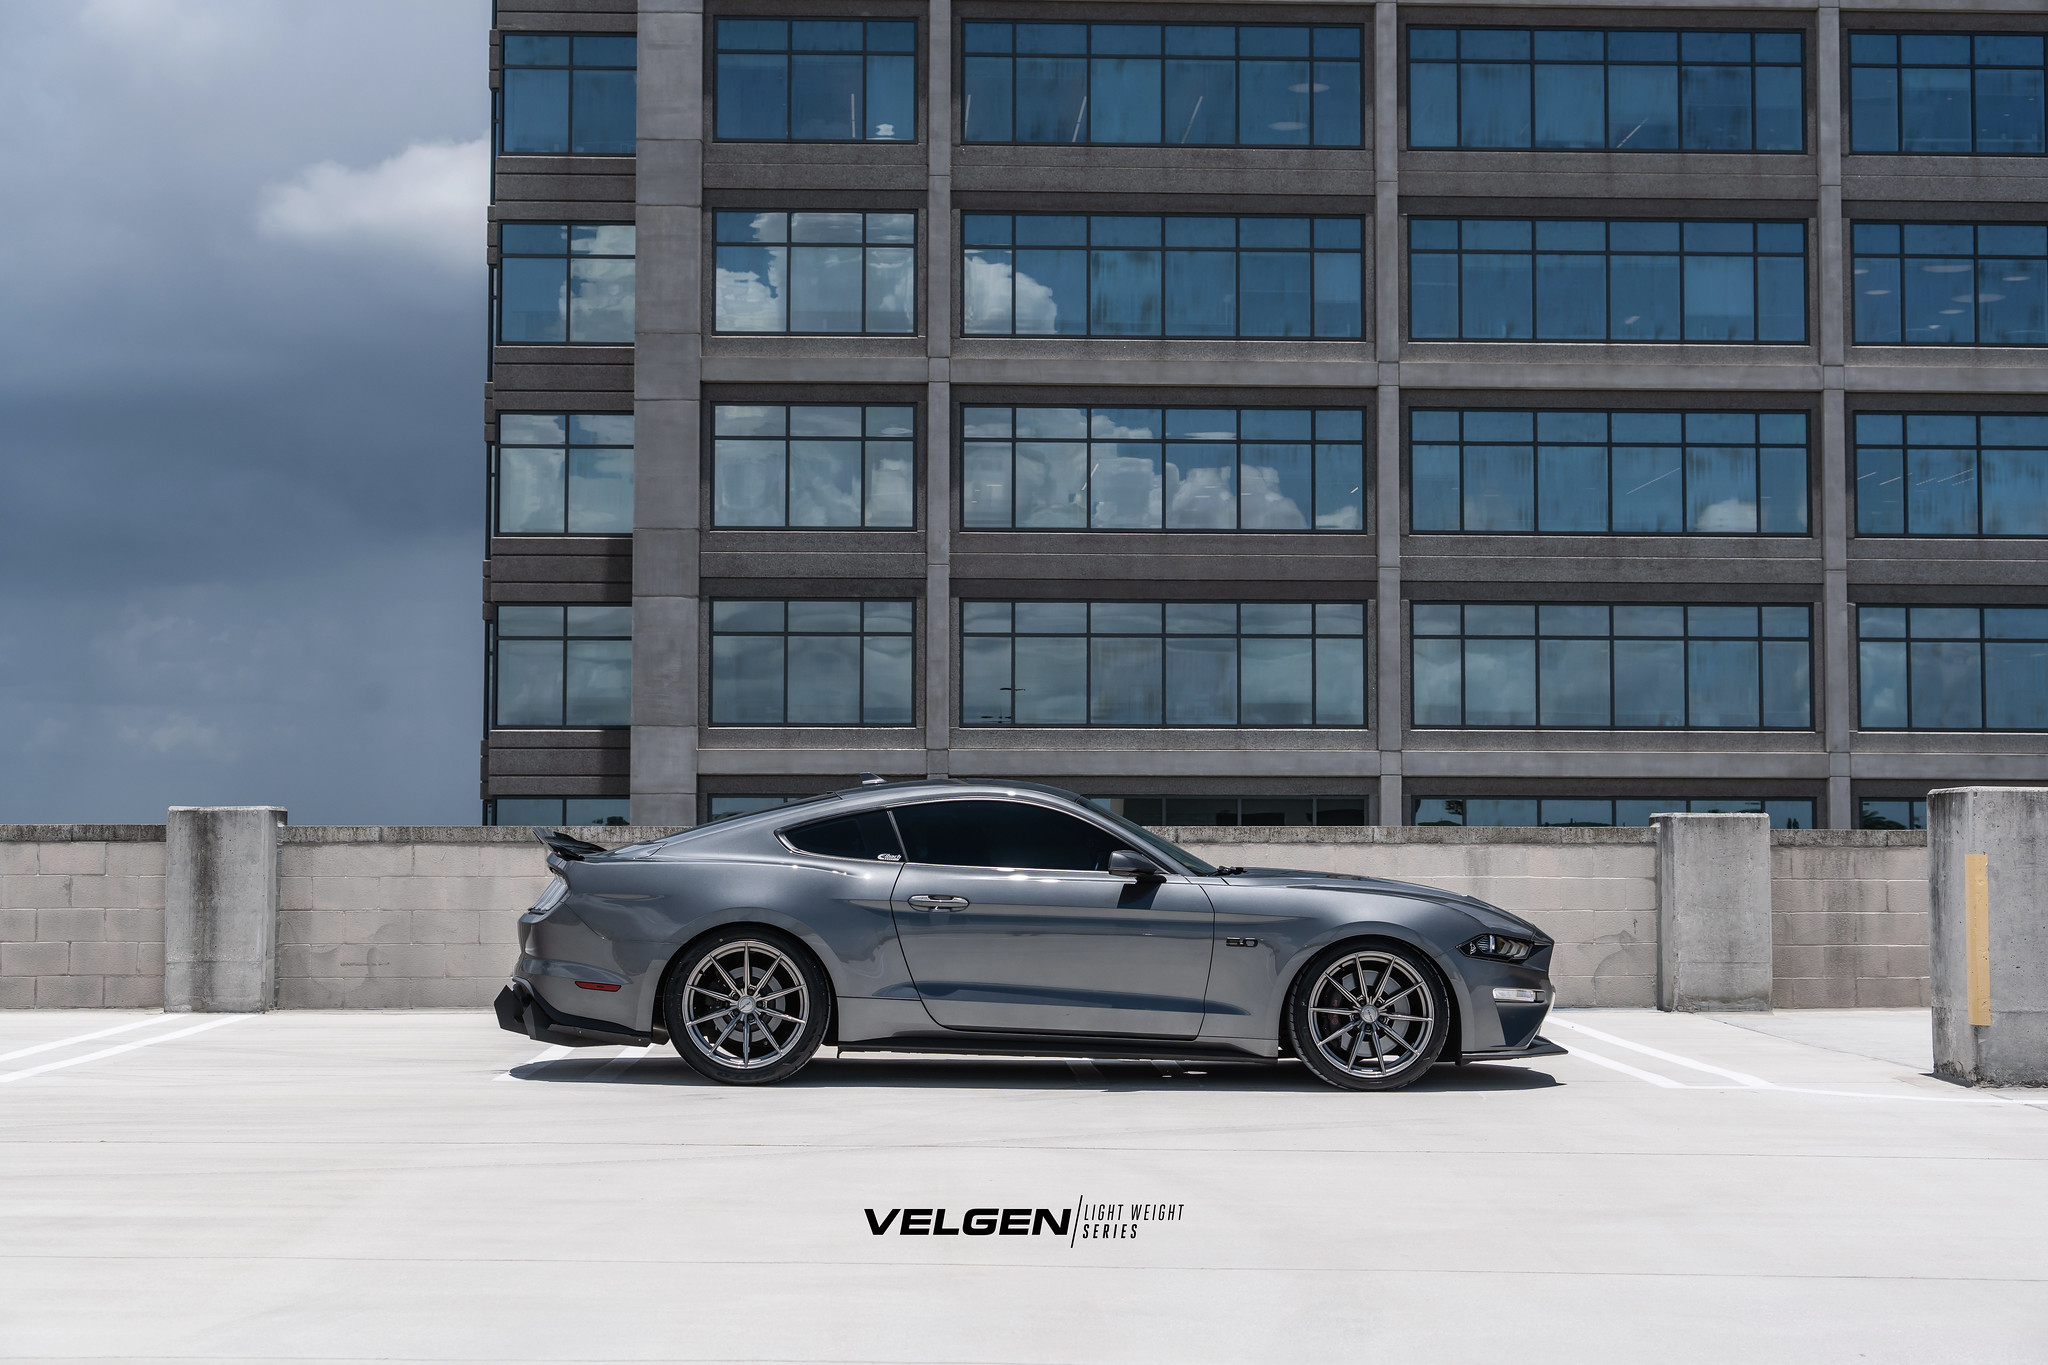 S650 Mustang Velgen wheels for your S650 Mustang | Vibe Motorsports 53055670410_14f1ab7d16_k